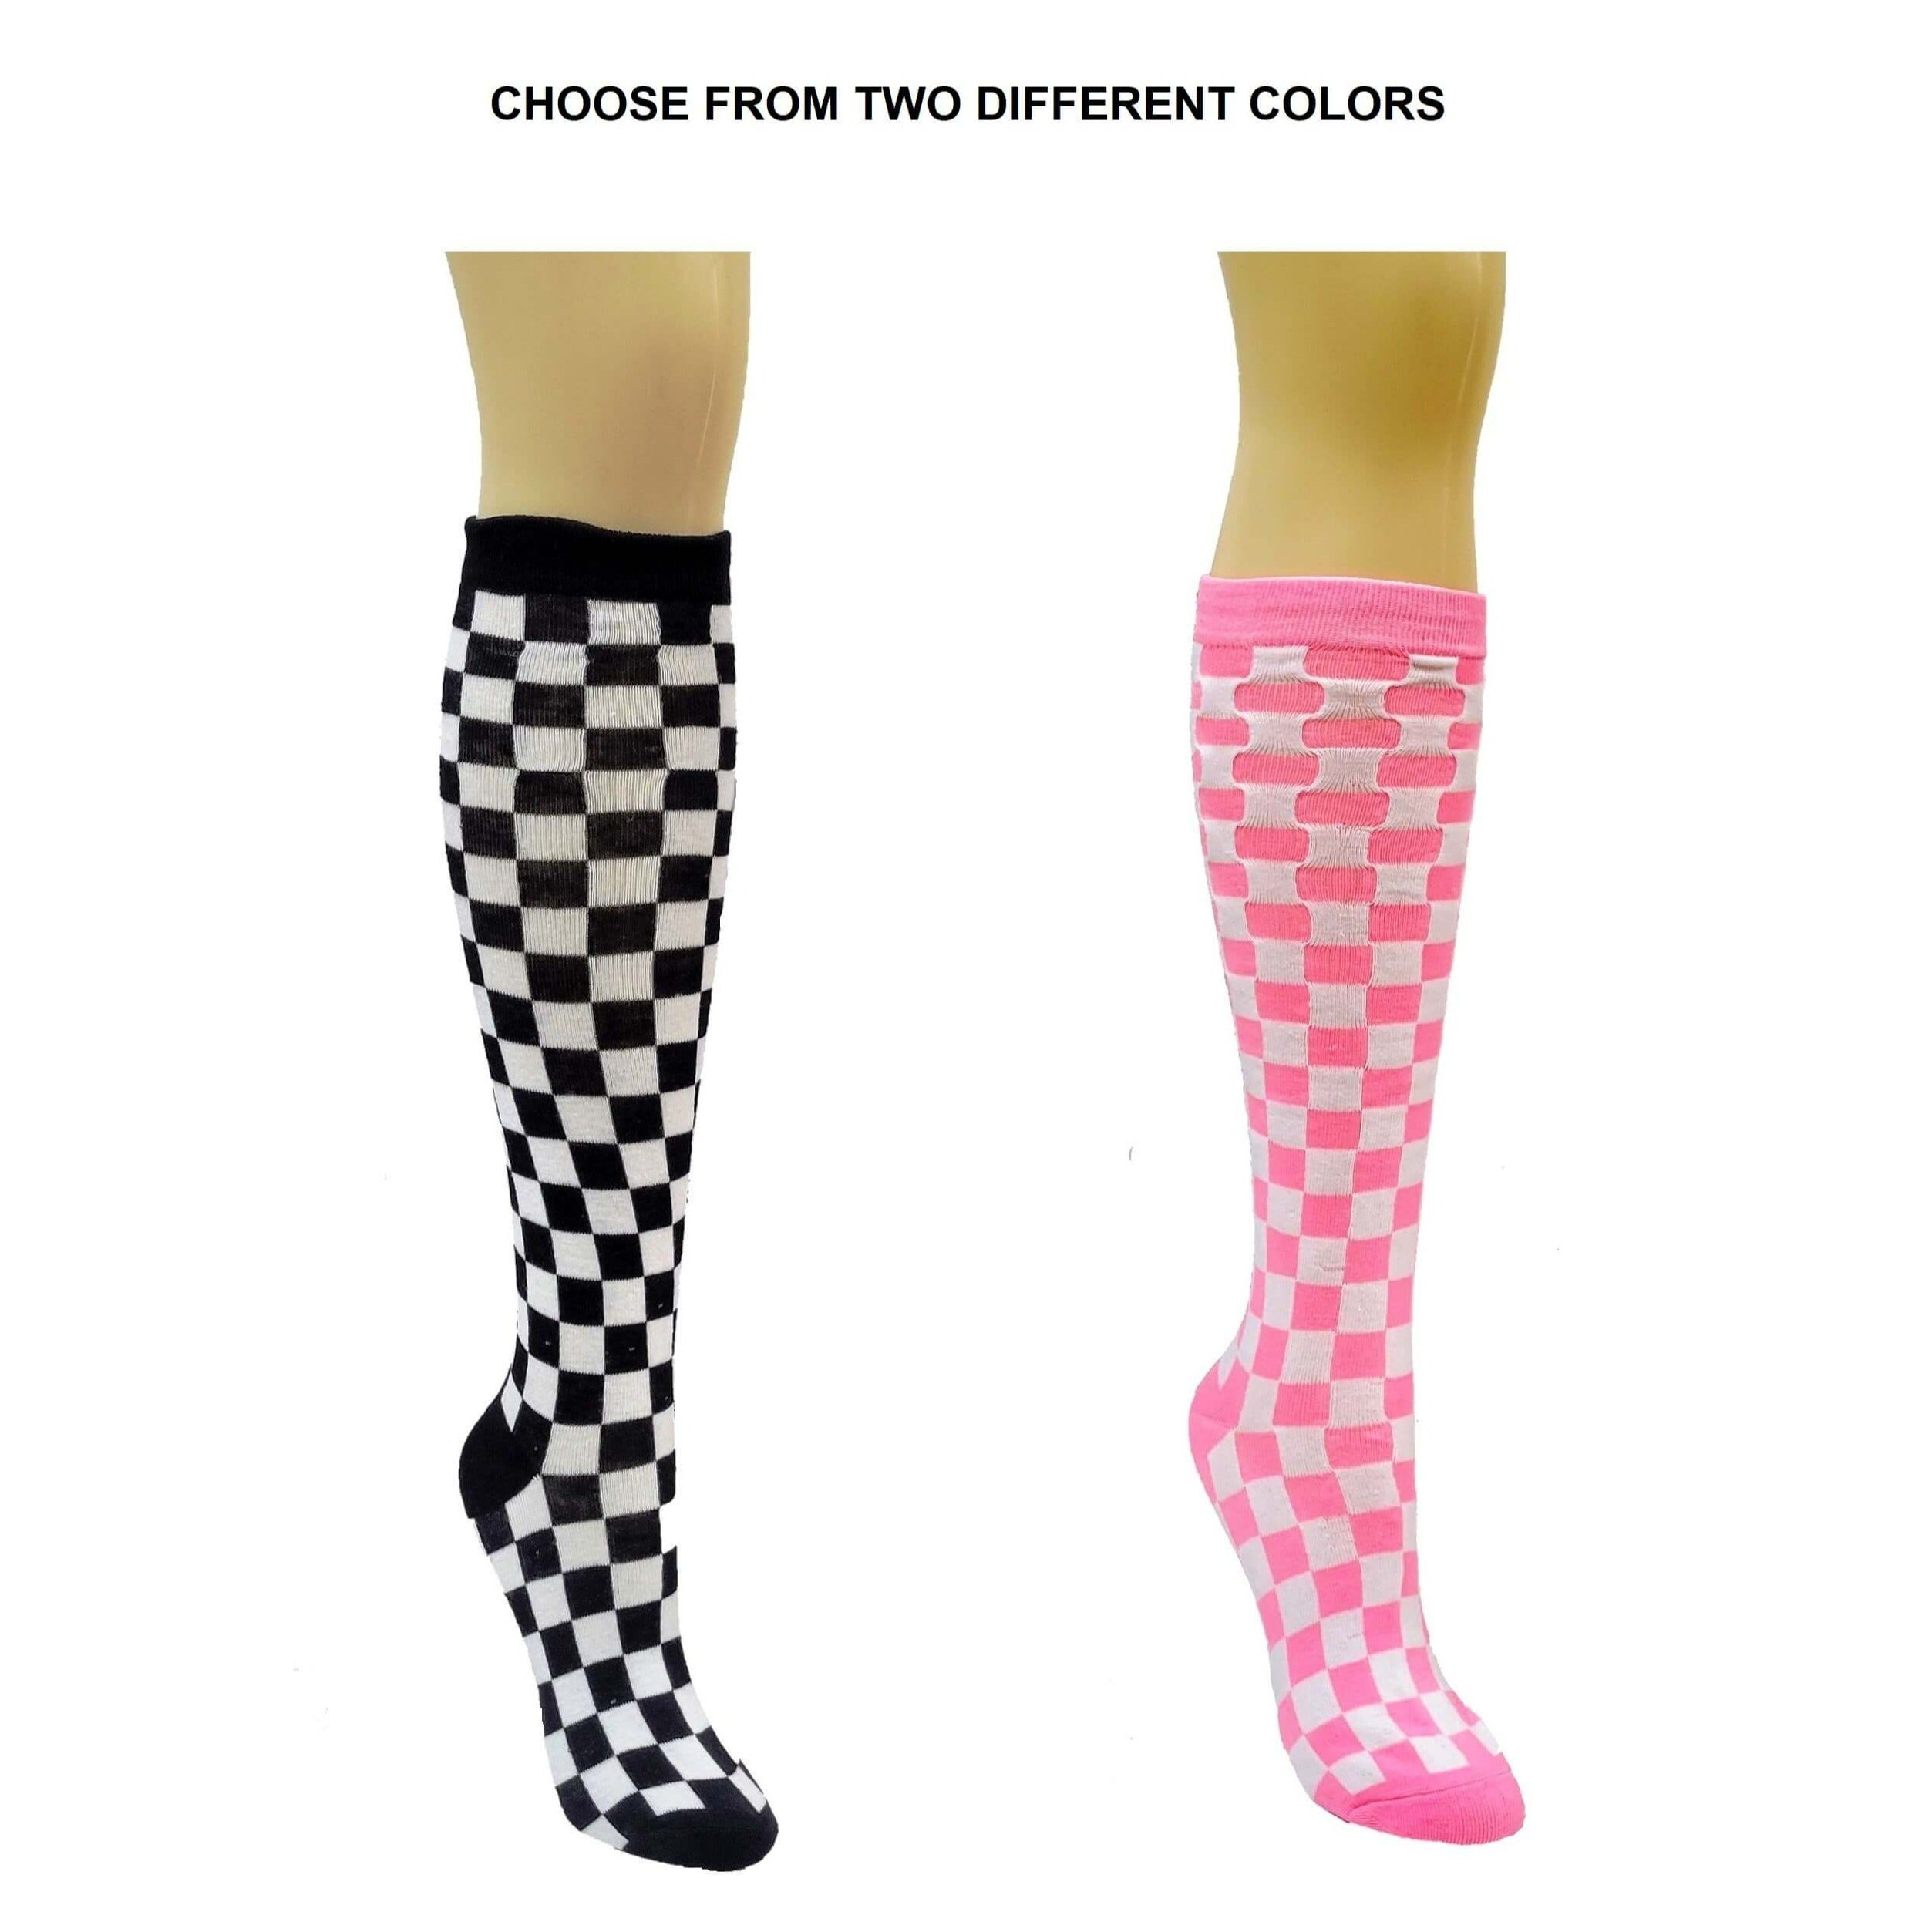 Checkered Pattern Knee High Socks (Adult Medium)